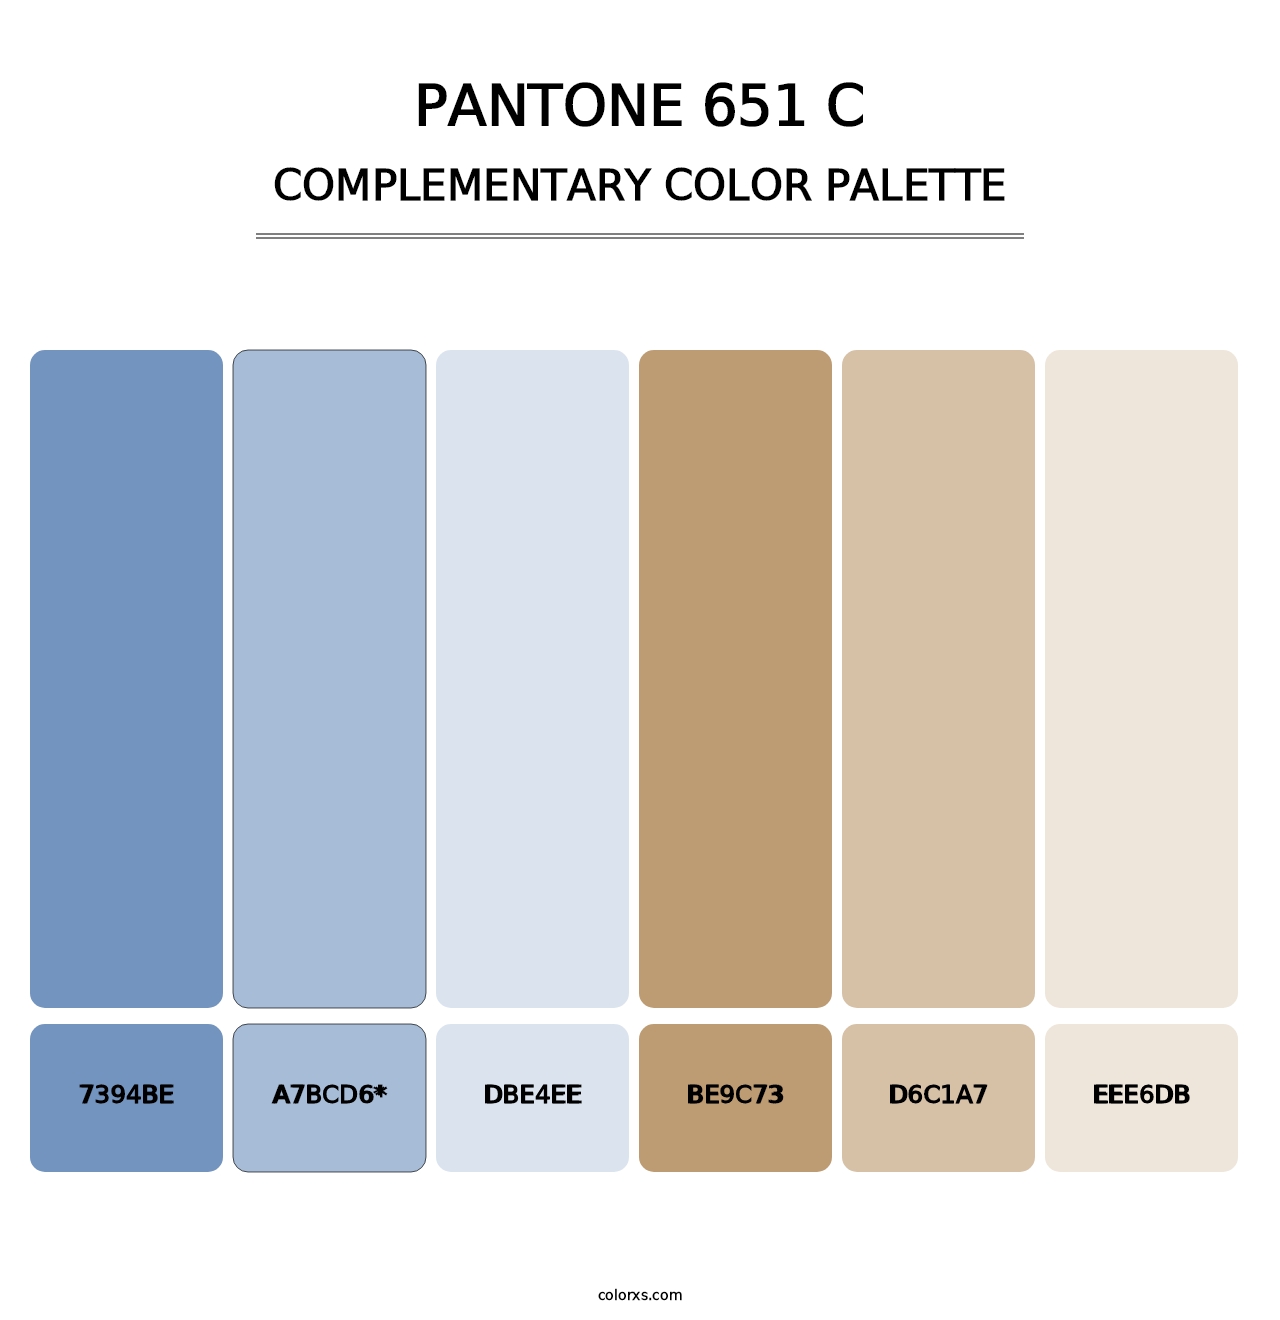 PANTONE 651 C - Complementary Color Palette